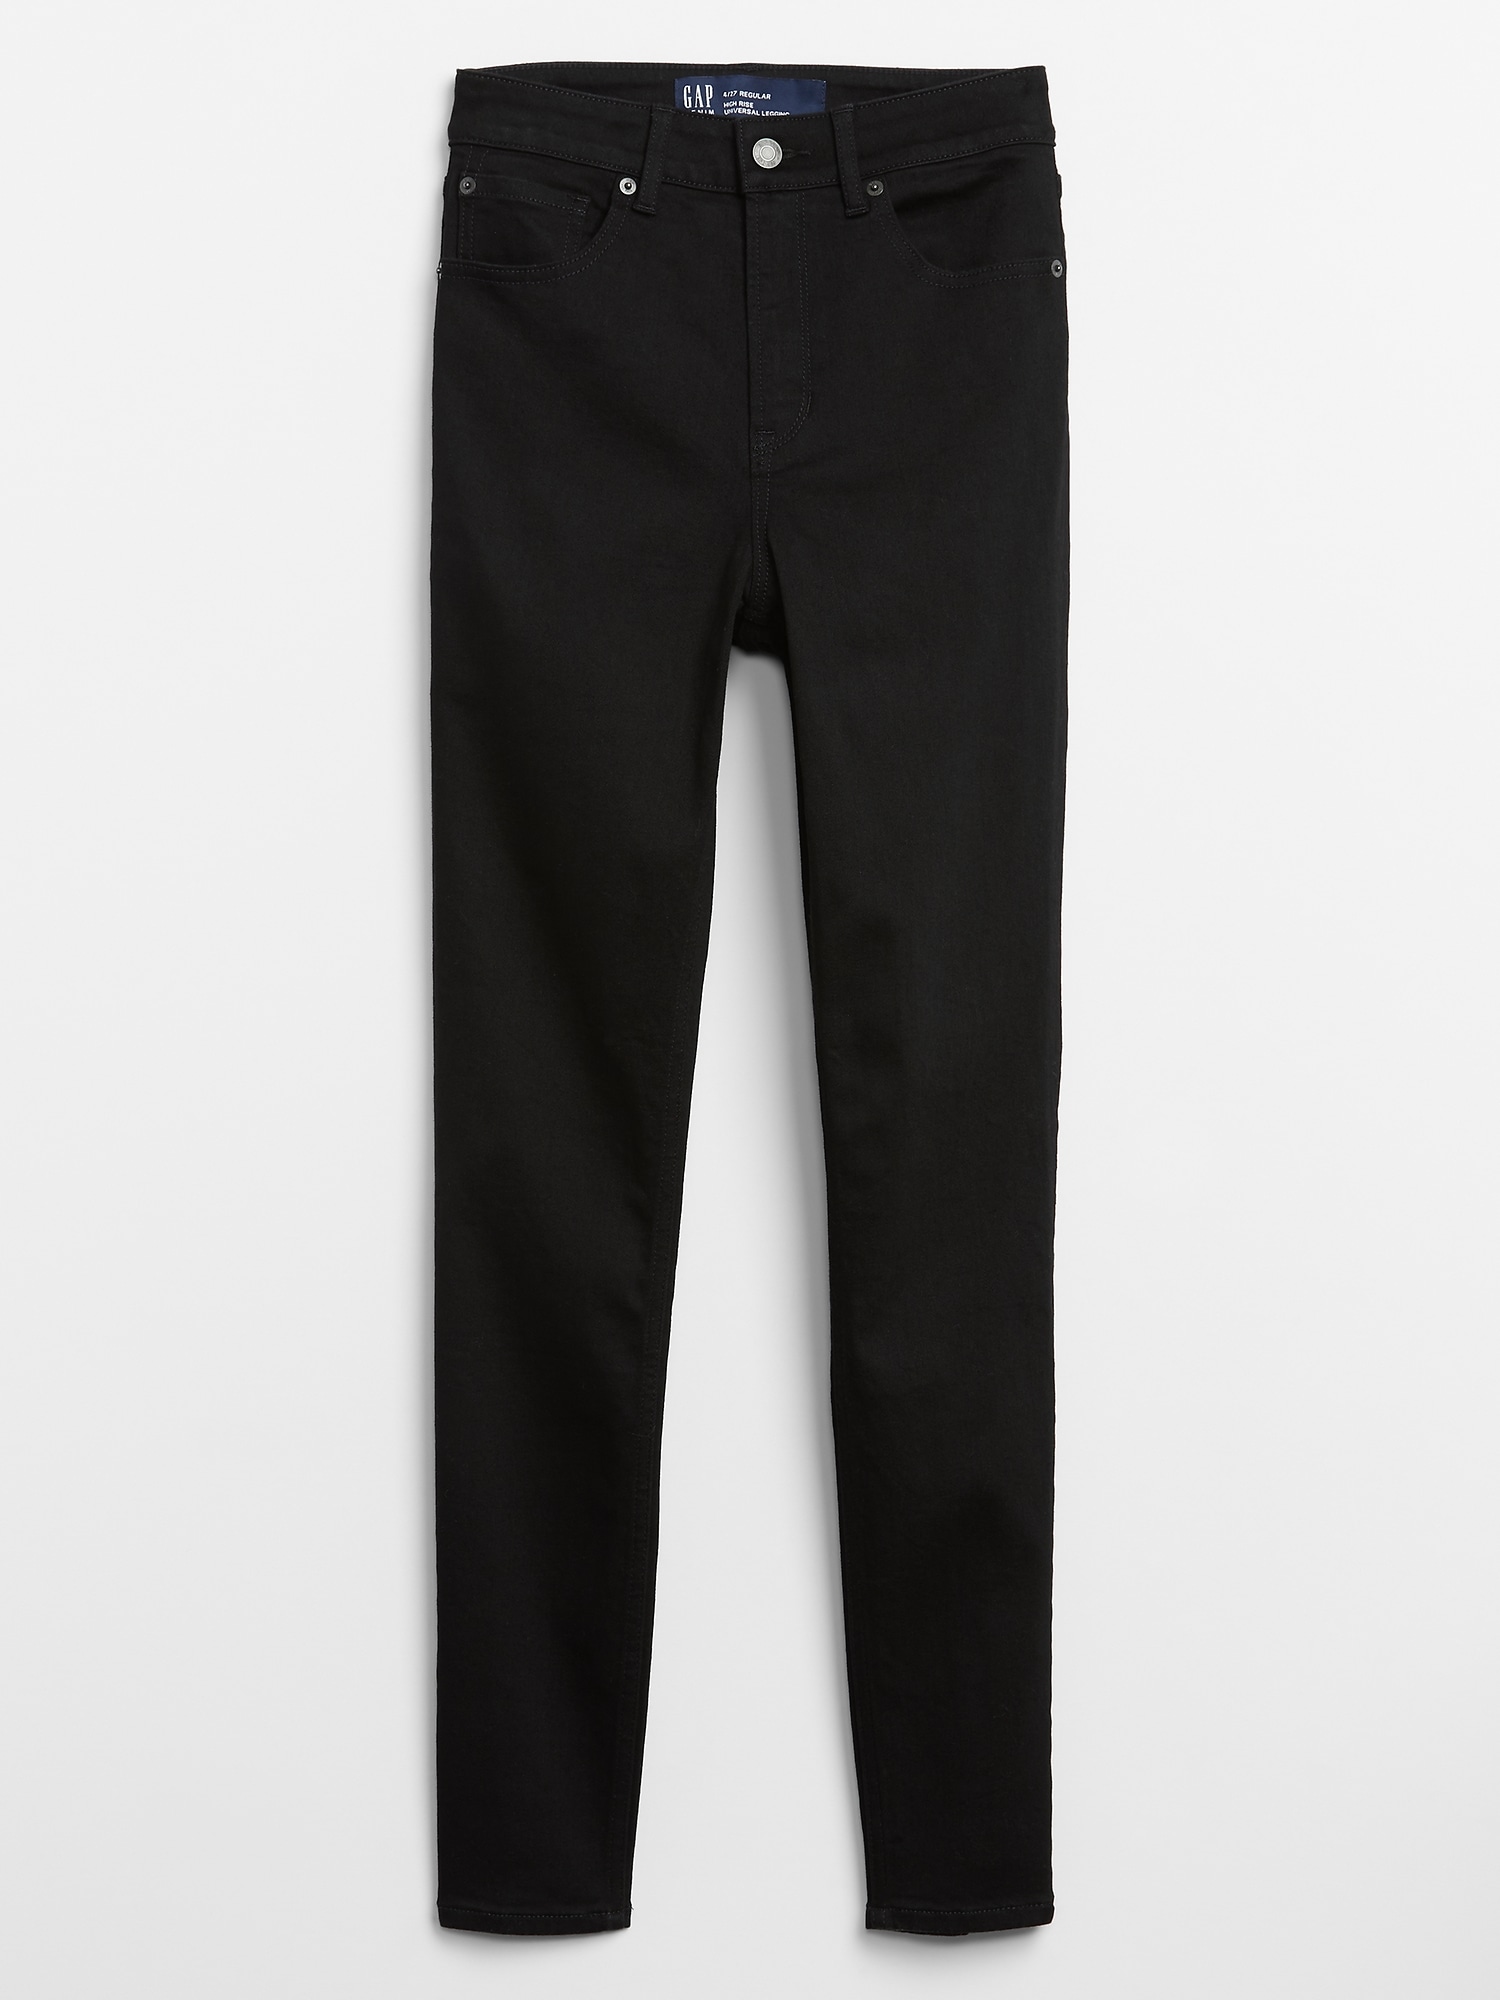 Men - Gray Skinny Jeans - Size: 31/32 - H&M